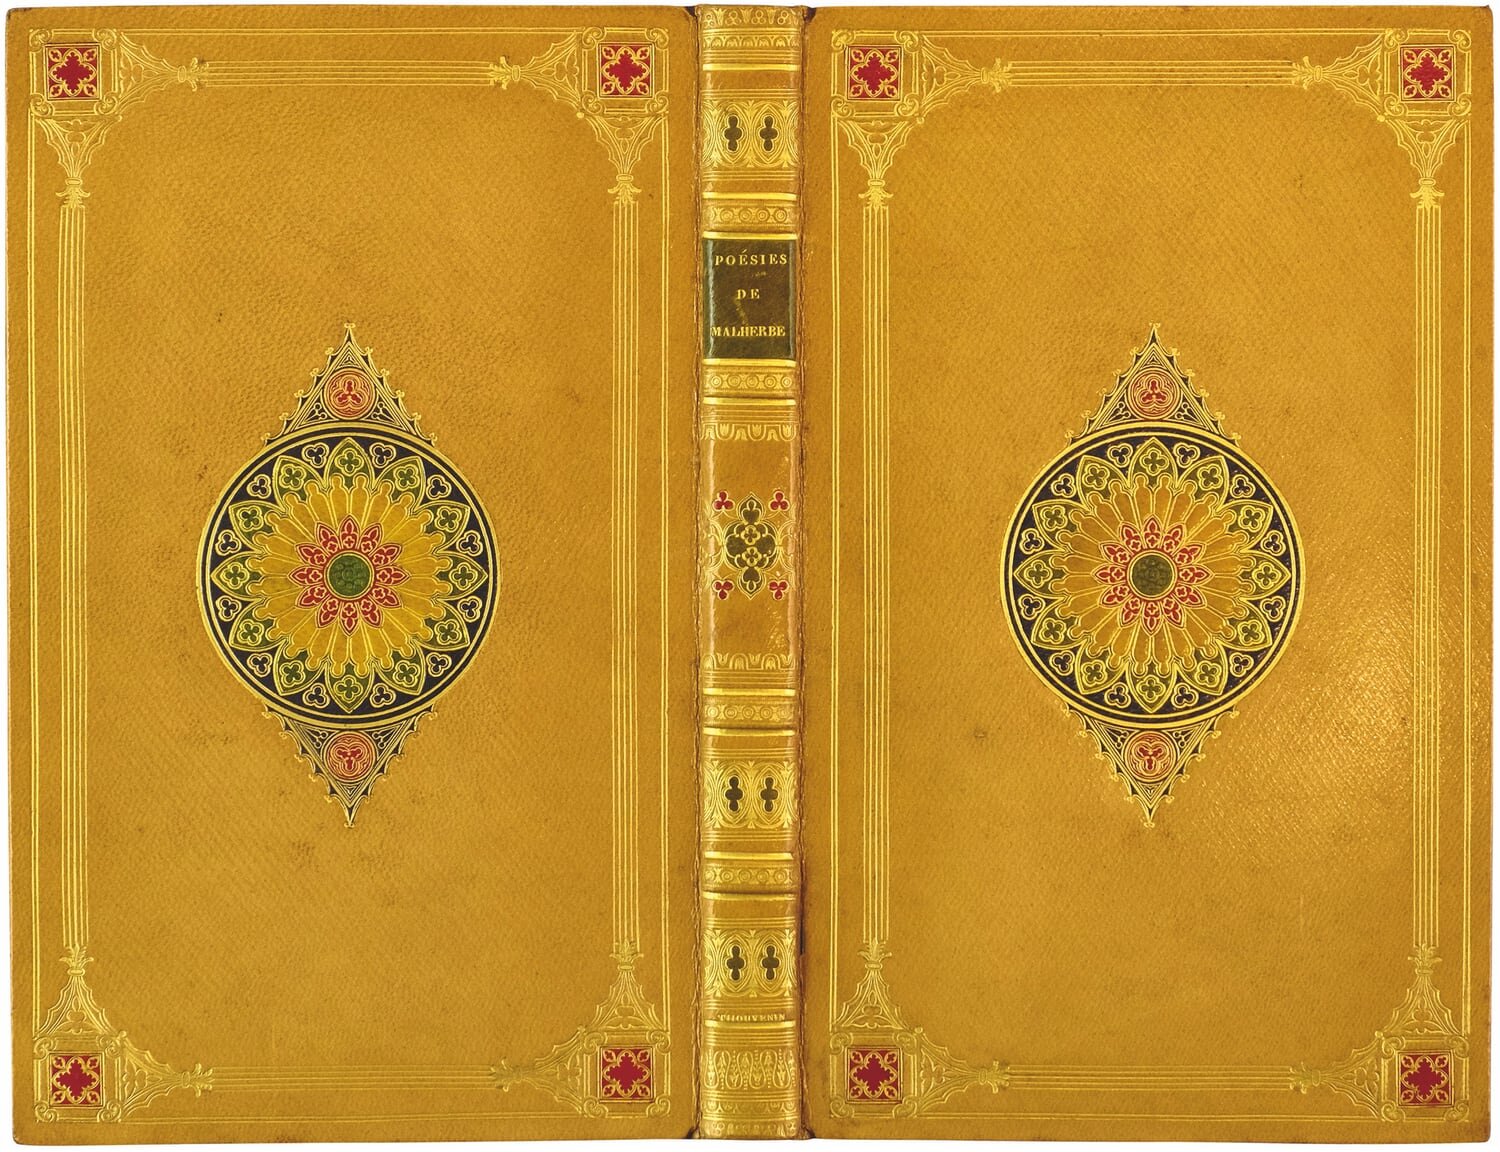  More rosettes; bindings by Duplanil fils [no. 558], Thouvenin [no. 438], Bogetti [no. 259], and Livre Mignard [no. 420]. 